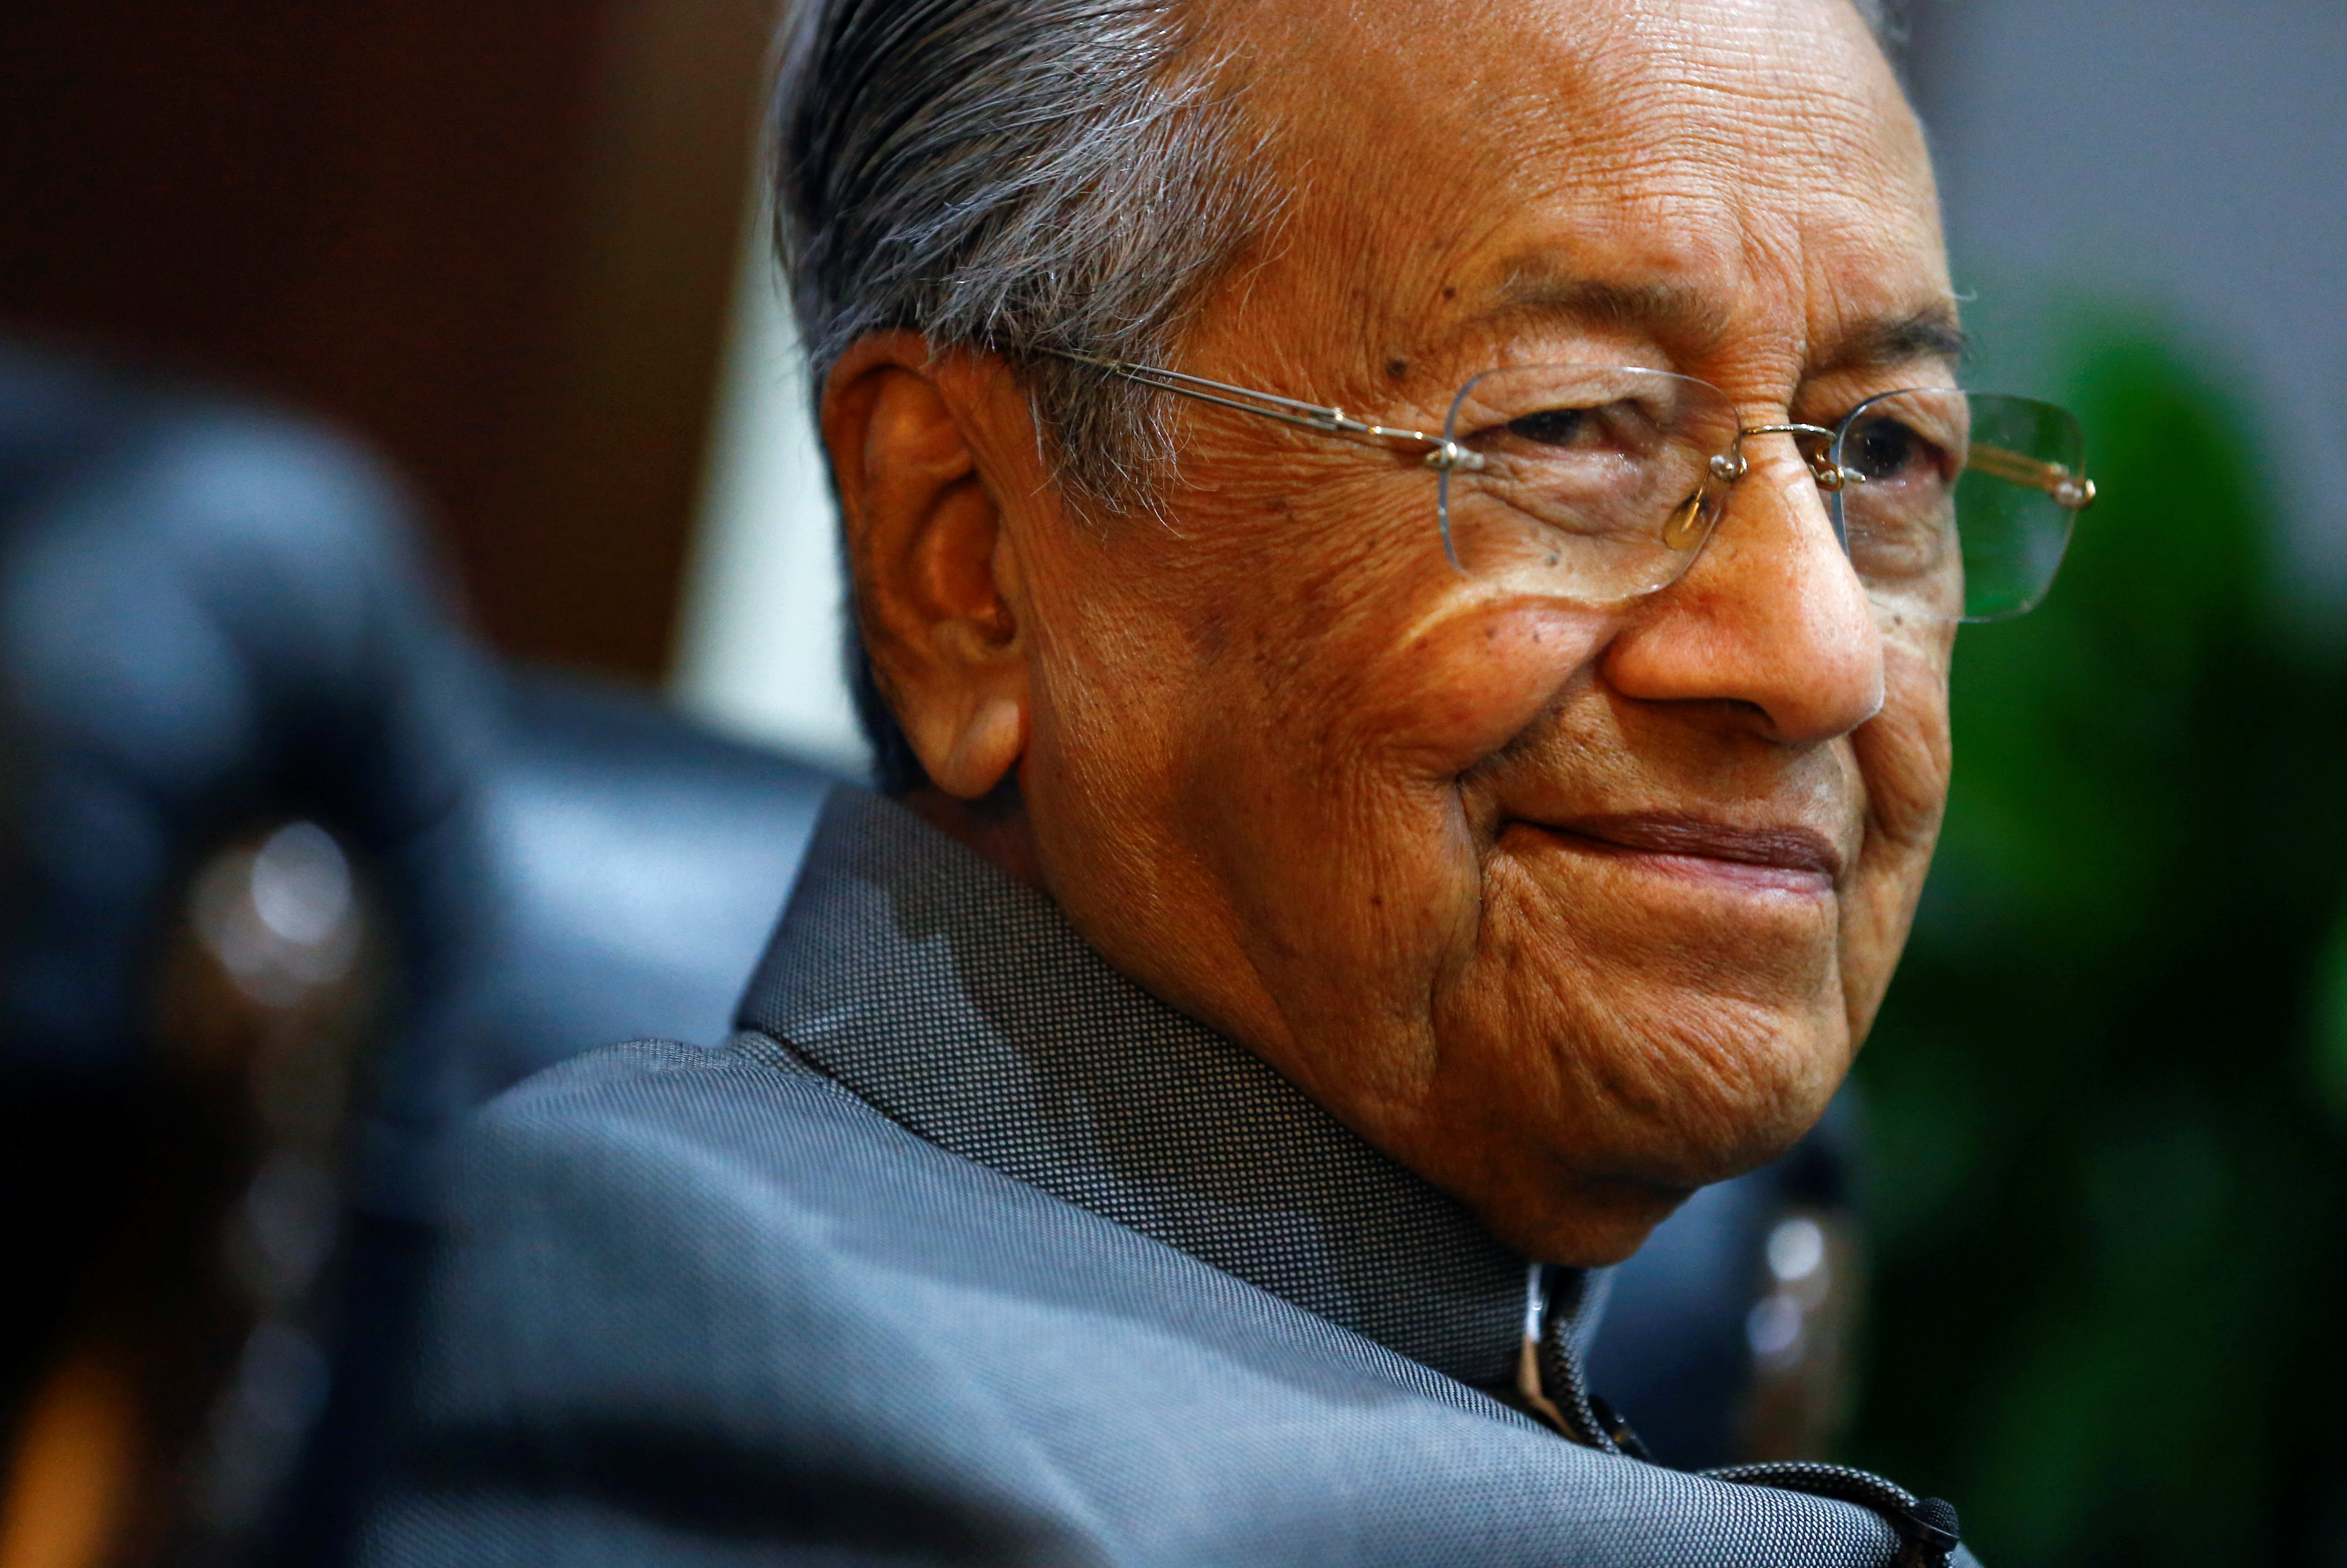 Birthday boy: Malaysian Prime Minister Mahathir Mohamad turned 94 on Wednesday. Photo: Reuters